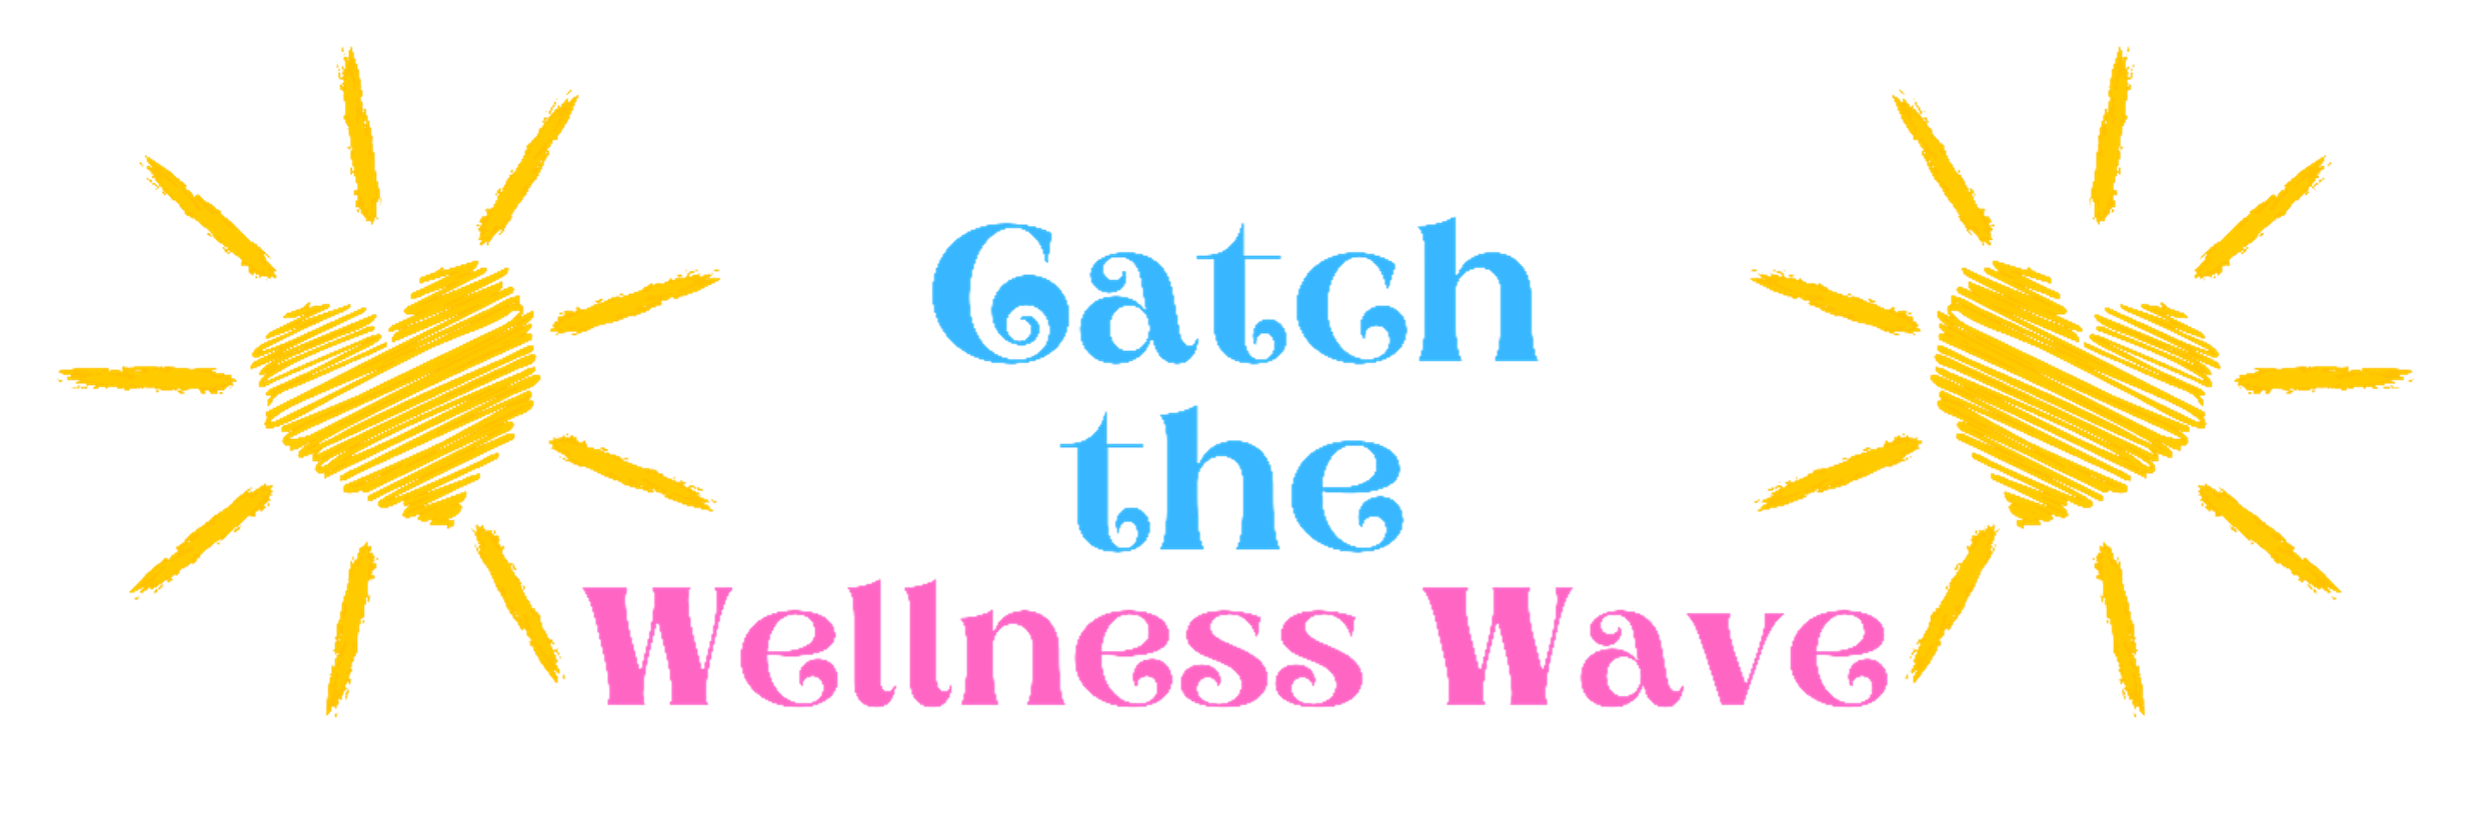 Health & Wellness - Catch the Wellnes Wave Banner